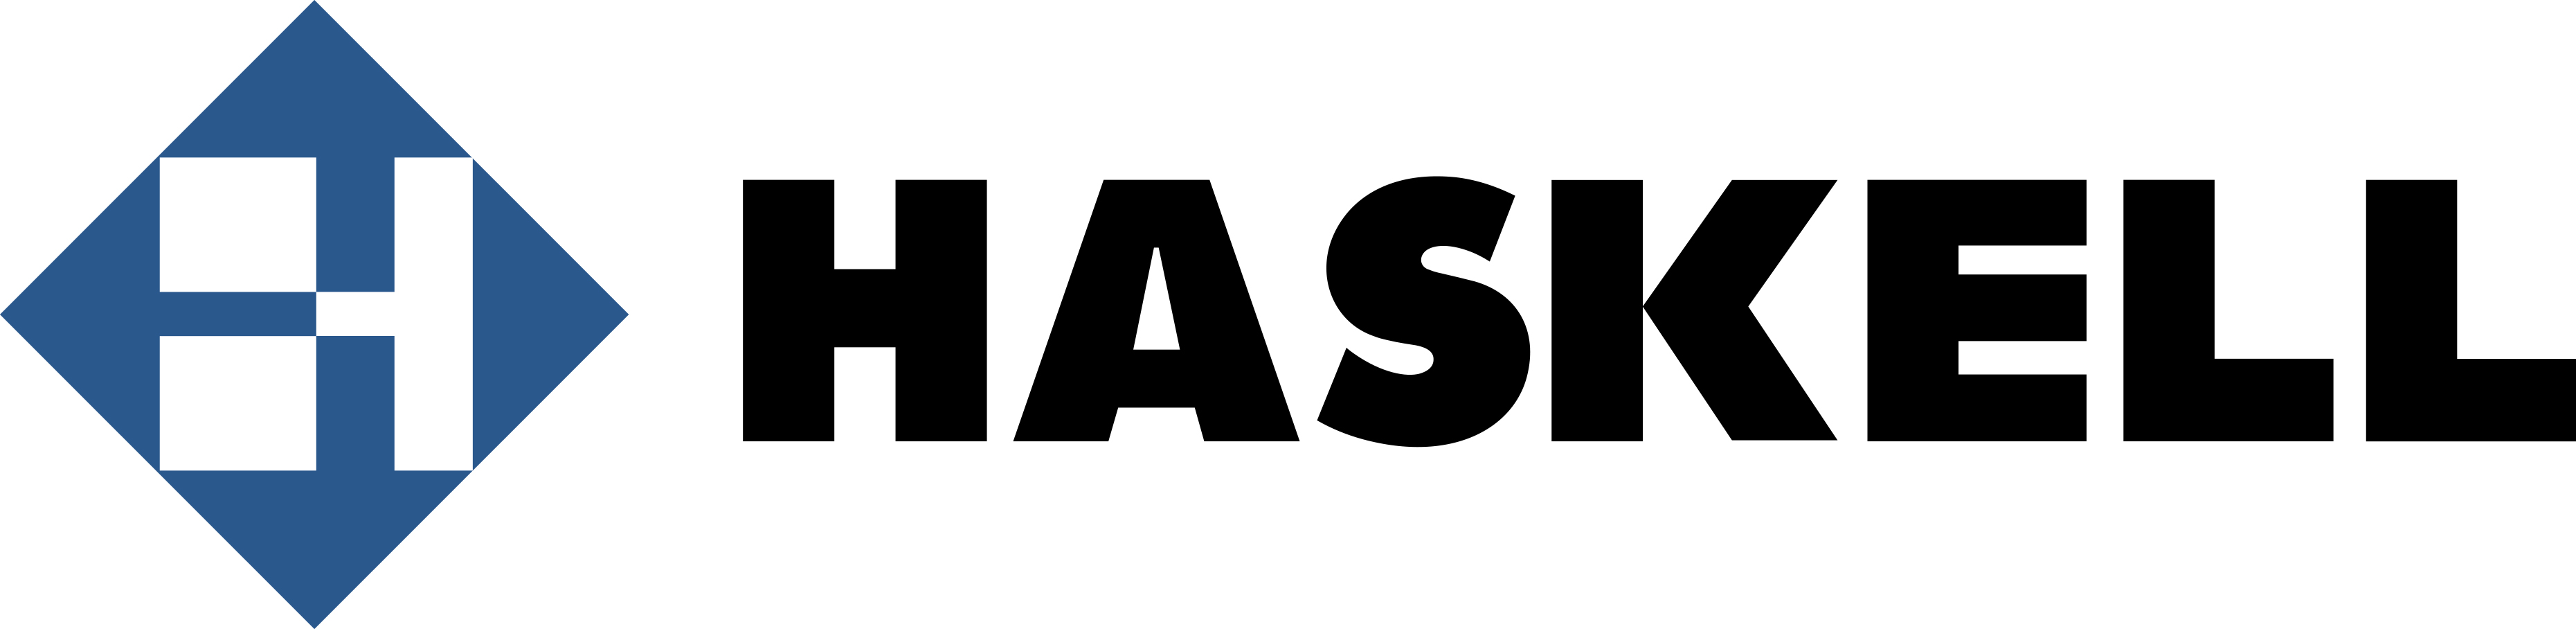 Haskell Logo 4c.jpg